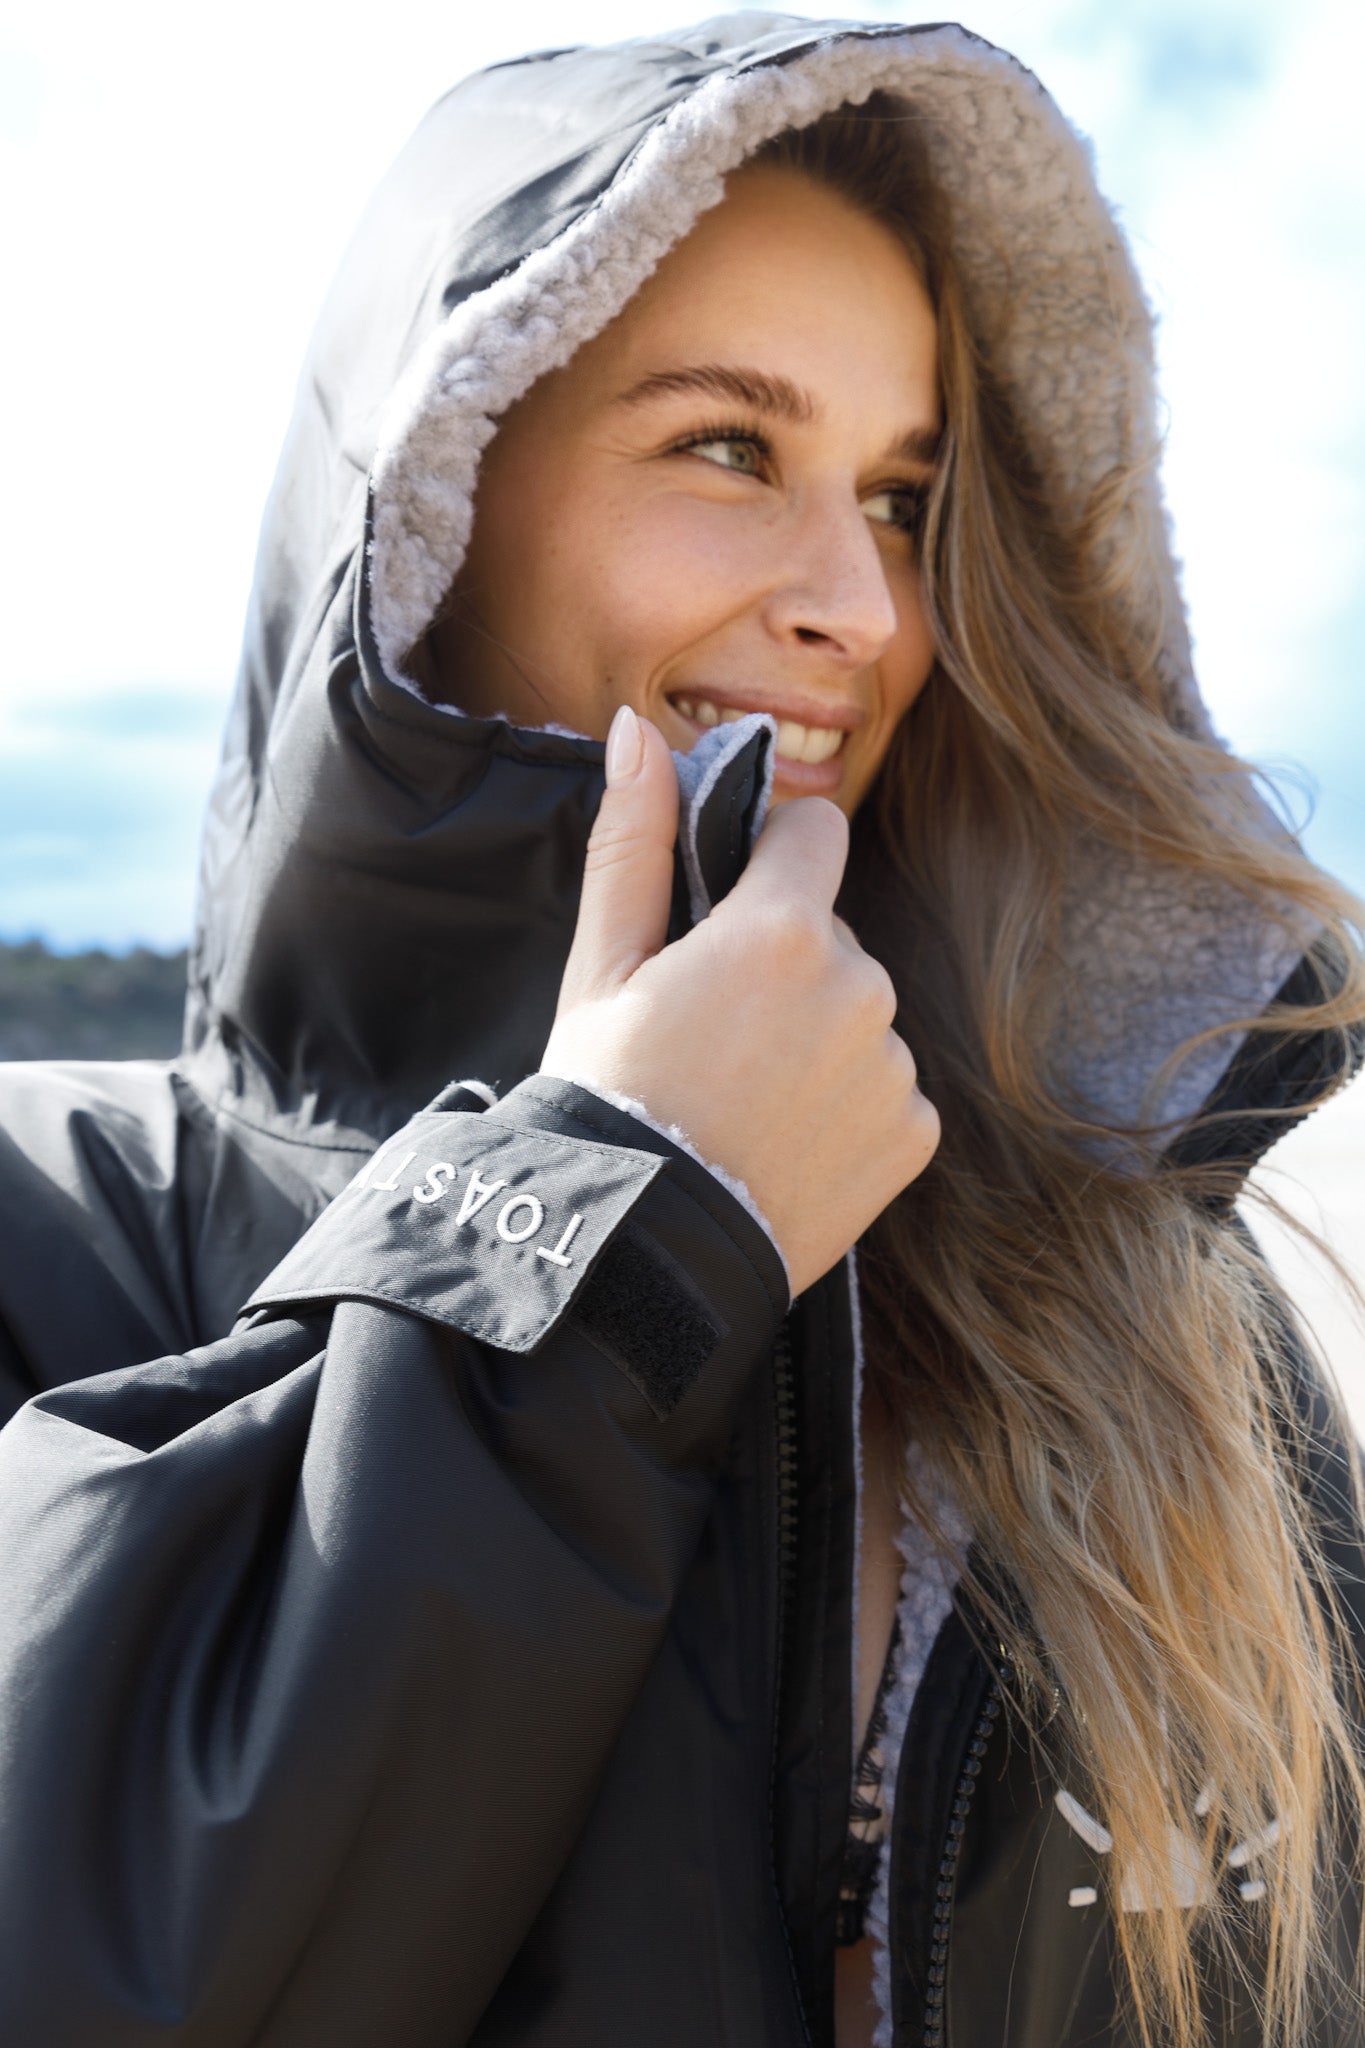 TOASTY Fleece lined weatherproof jacket in black worn by a girl on the beach